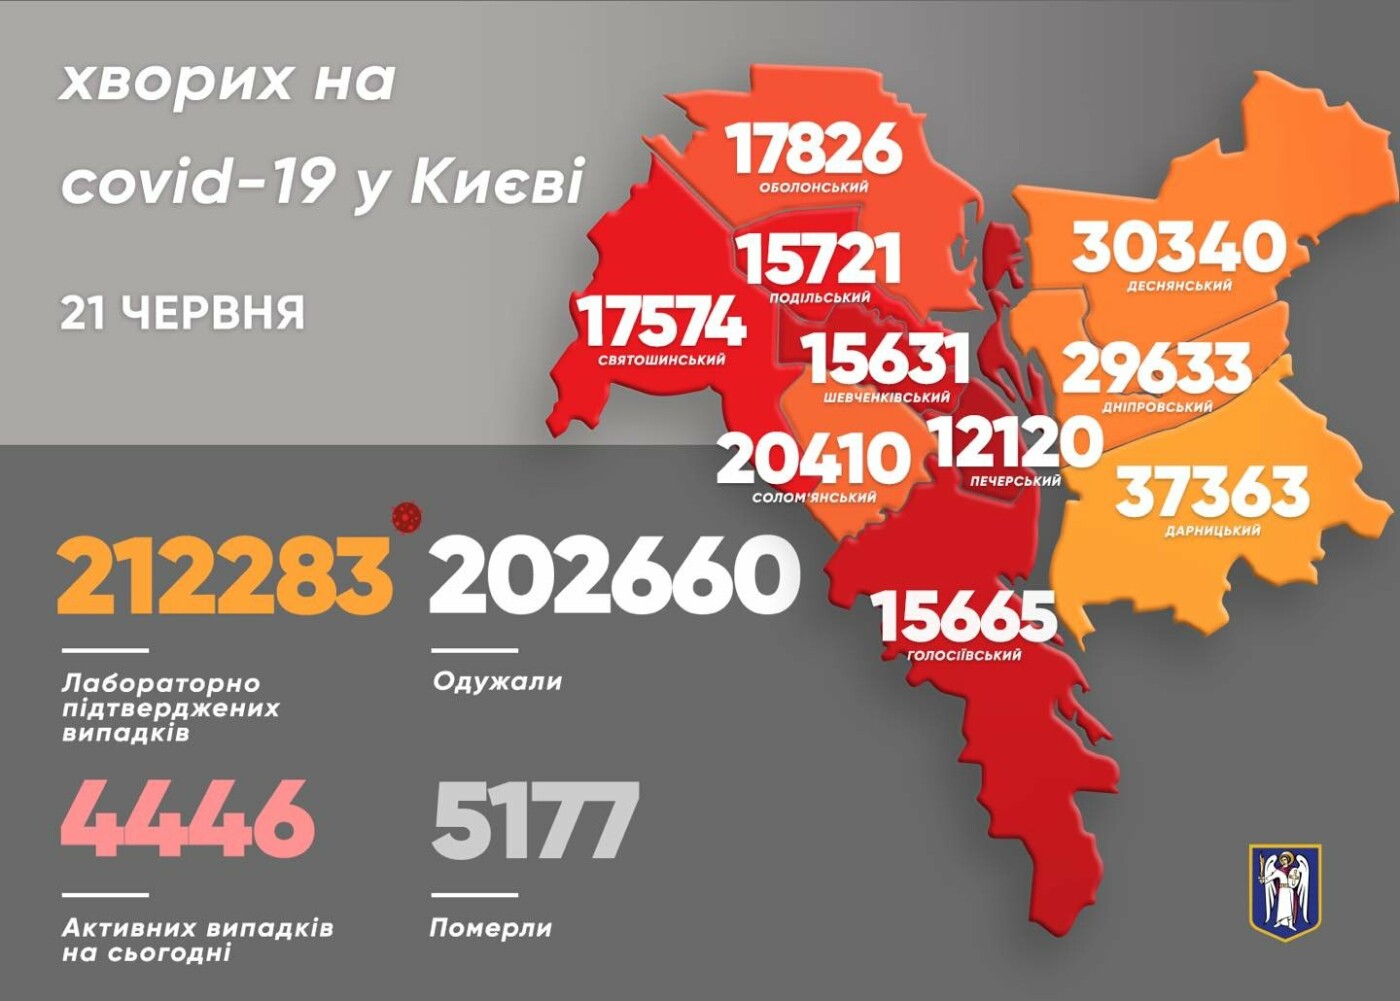 Коронавирус в Киеве: появилась статистика COVID-19 по районам на 21 июня